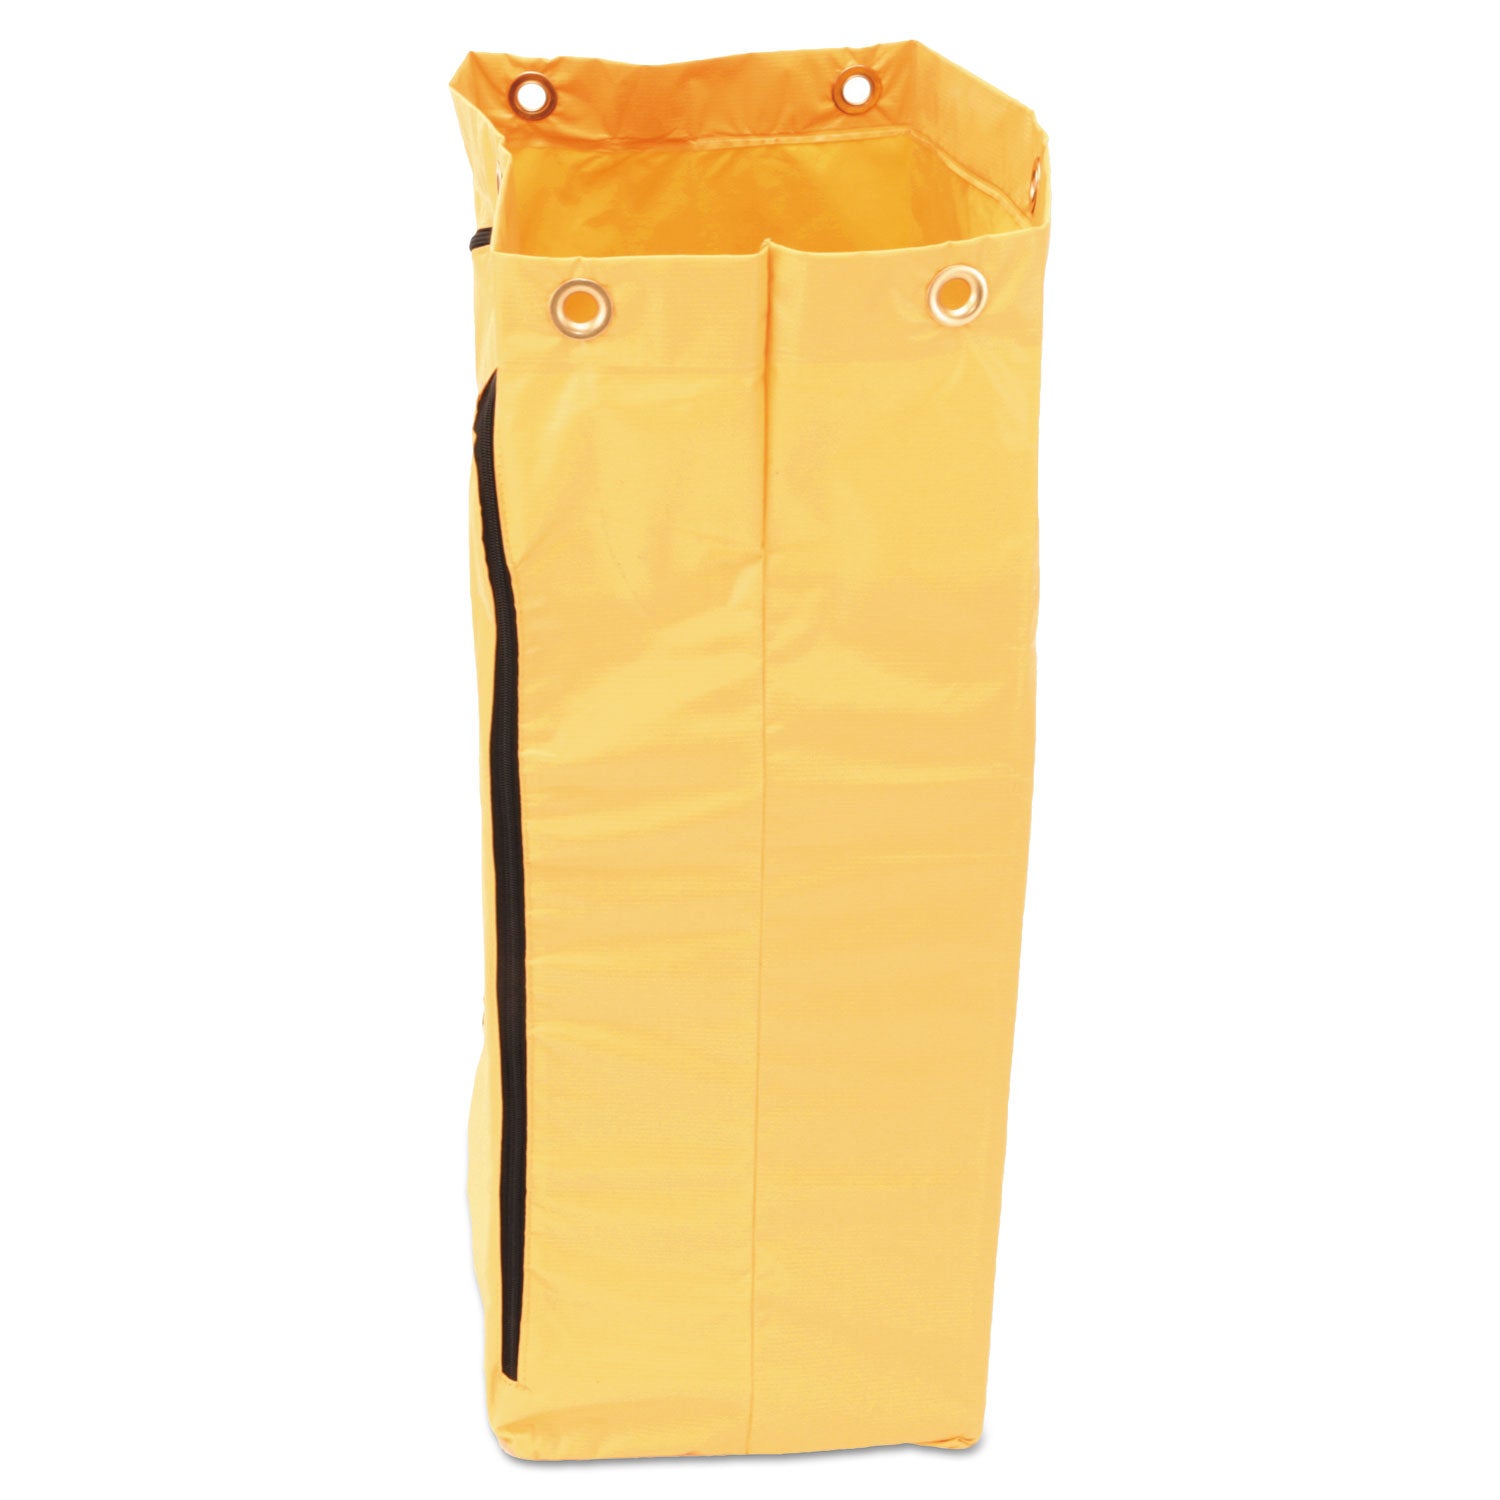 zippered-vinyl-cleaning-cart-bag-24-gal-1725-x-305-yellow_rcp1966719 - 2